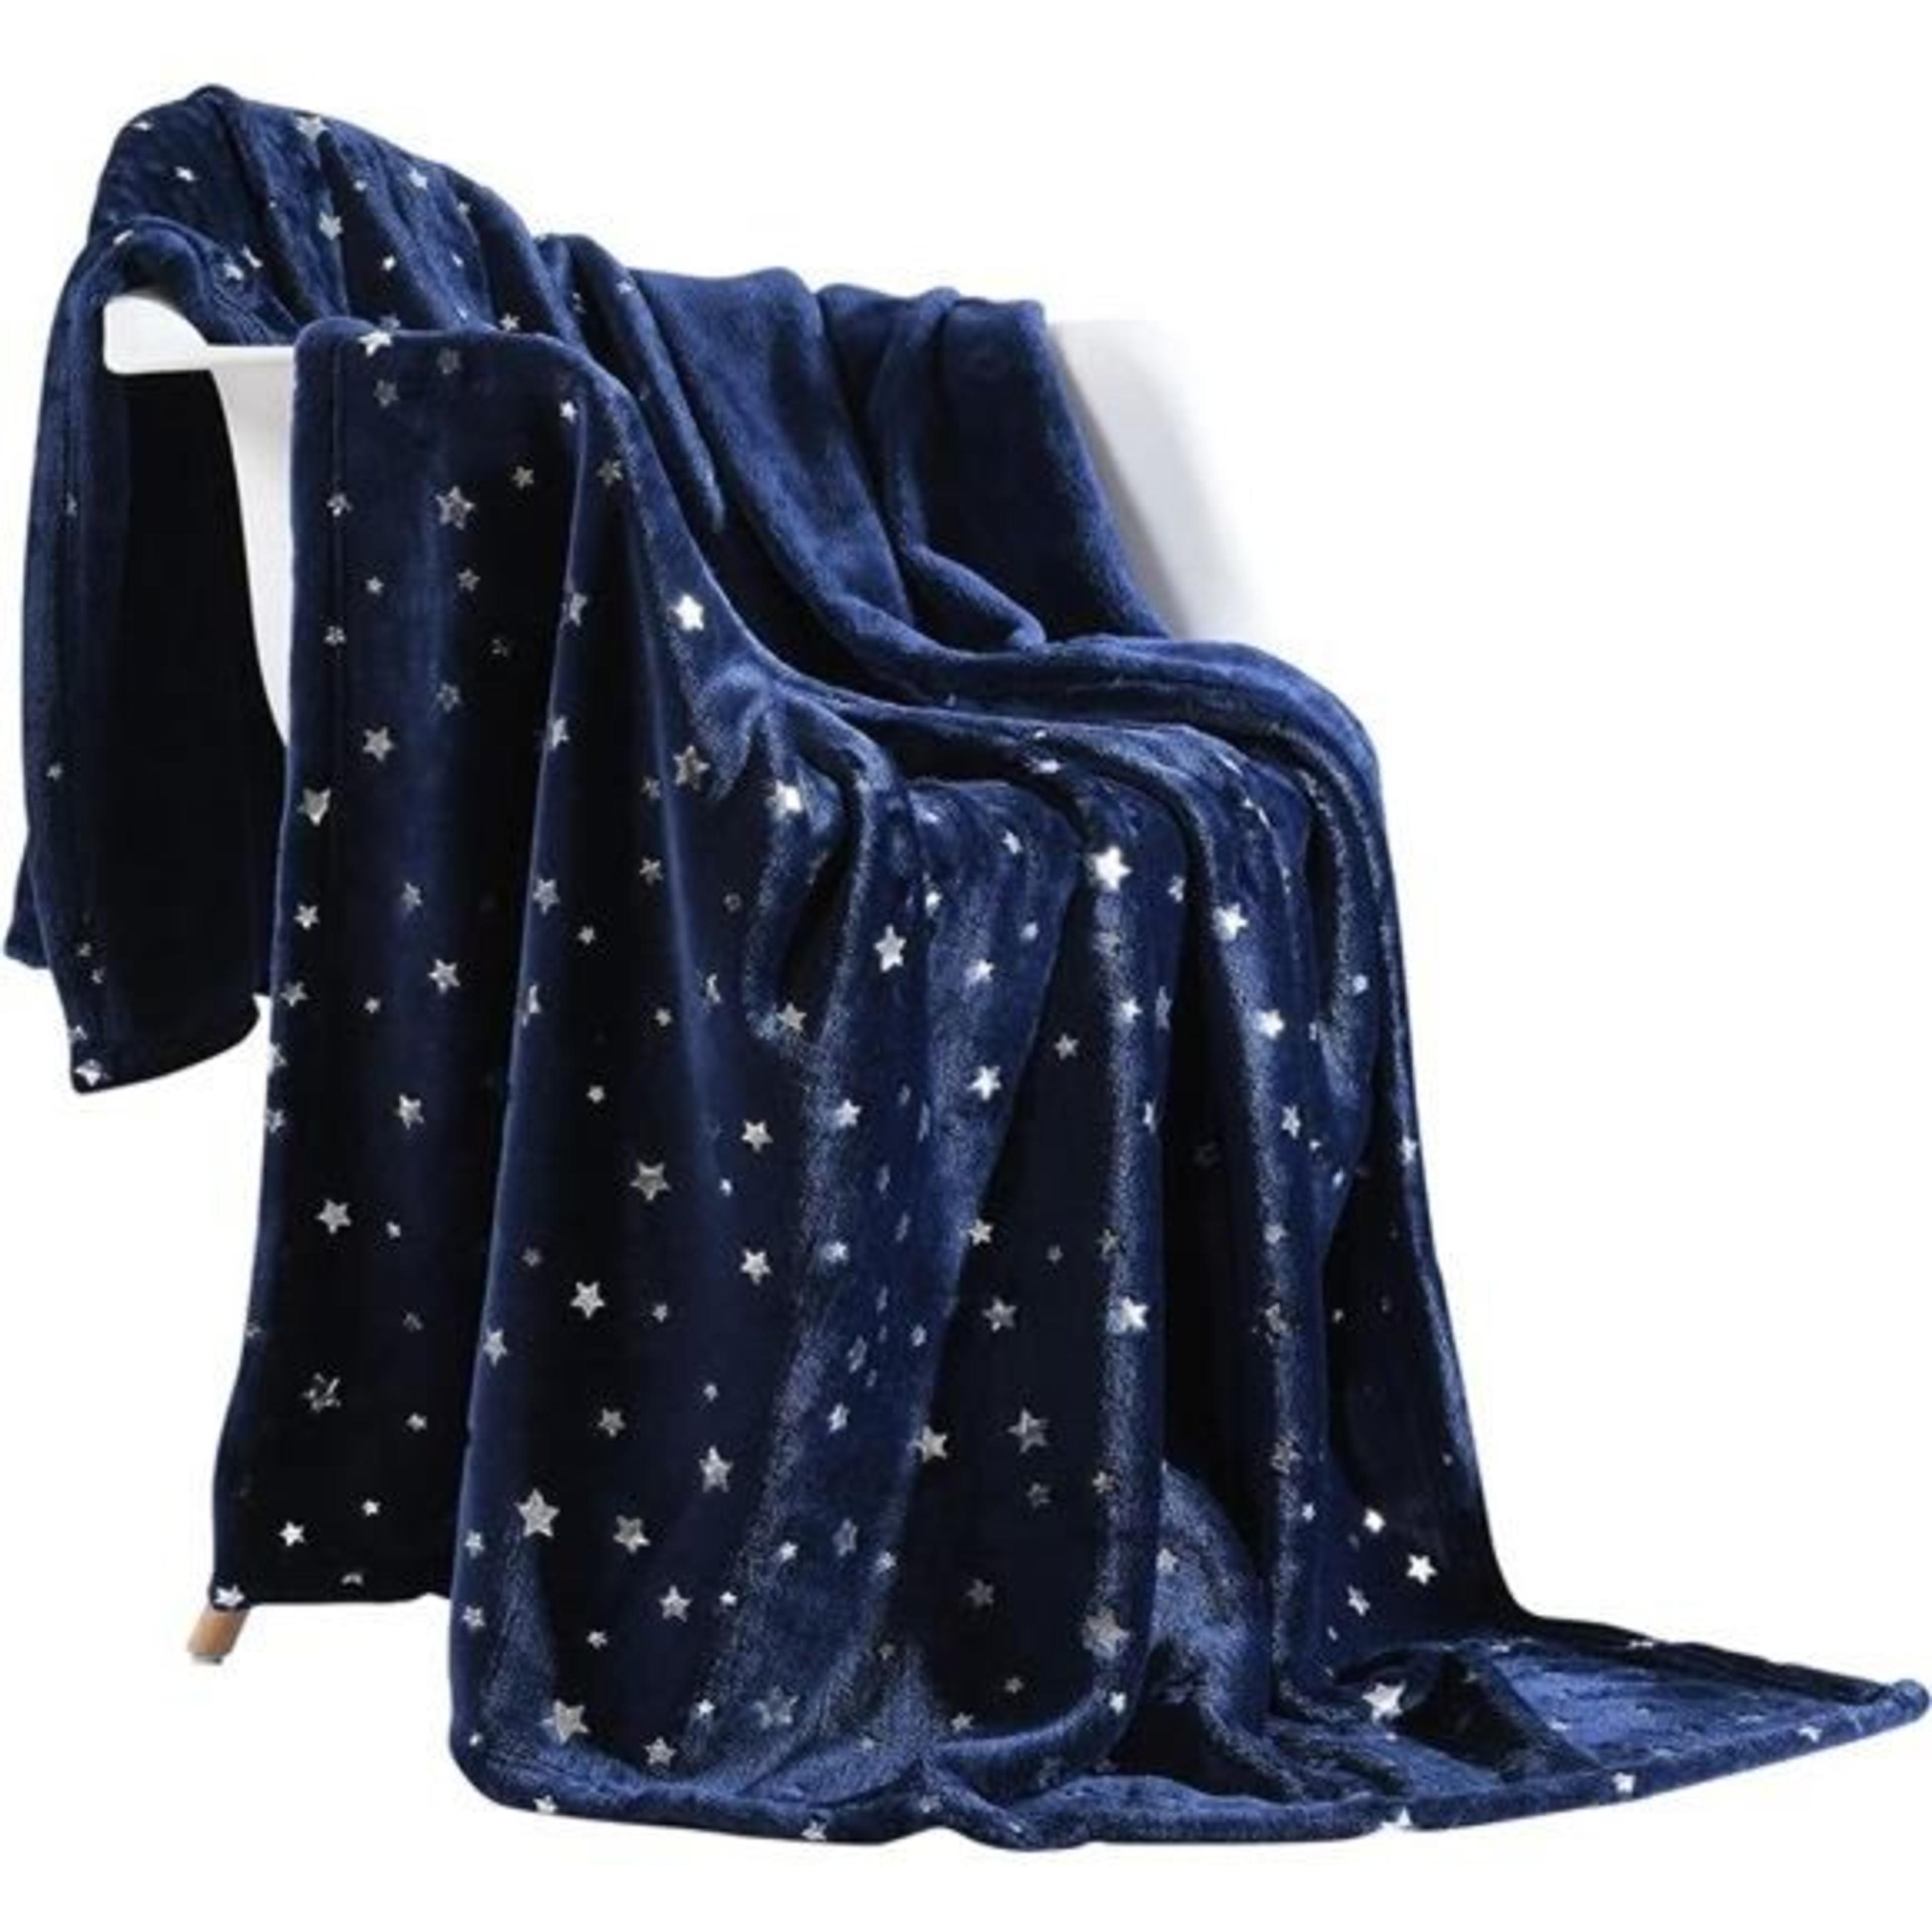 Throw Blanket, Ultra Soft Thick Microplush Bed Blanket,All Season Premium Fluffy